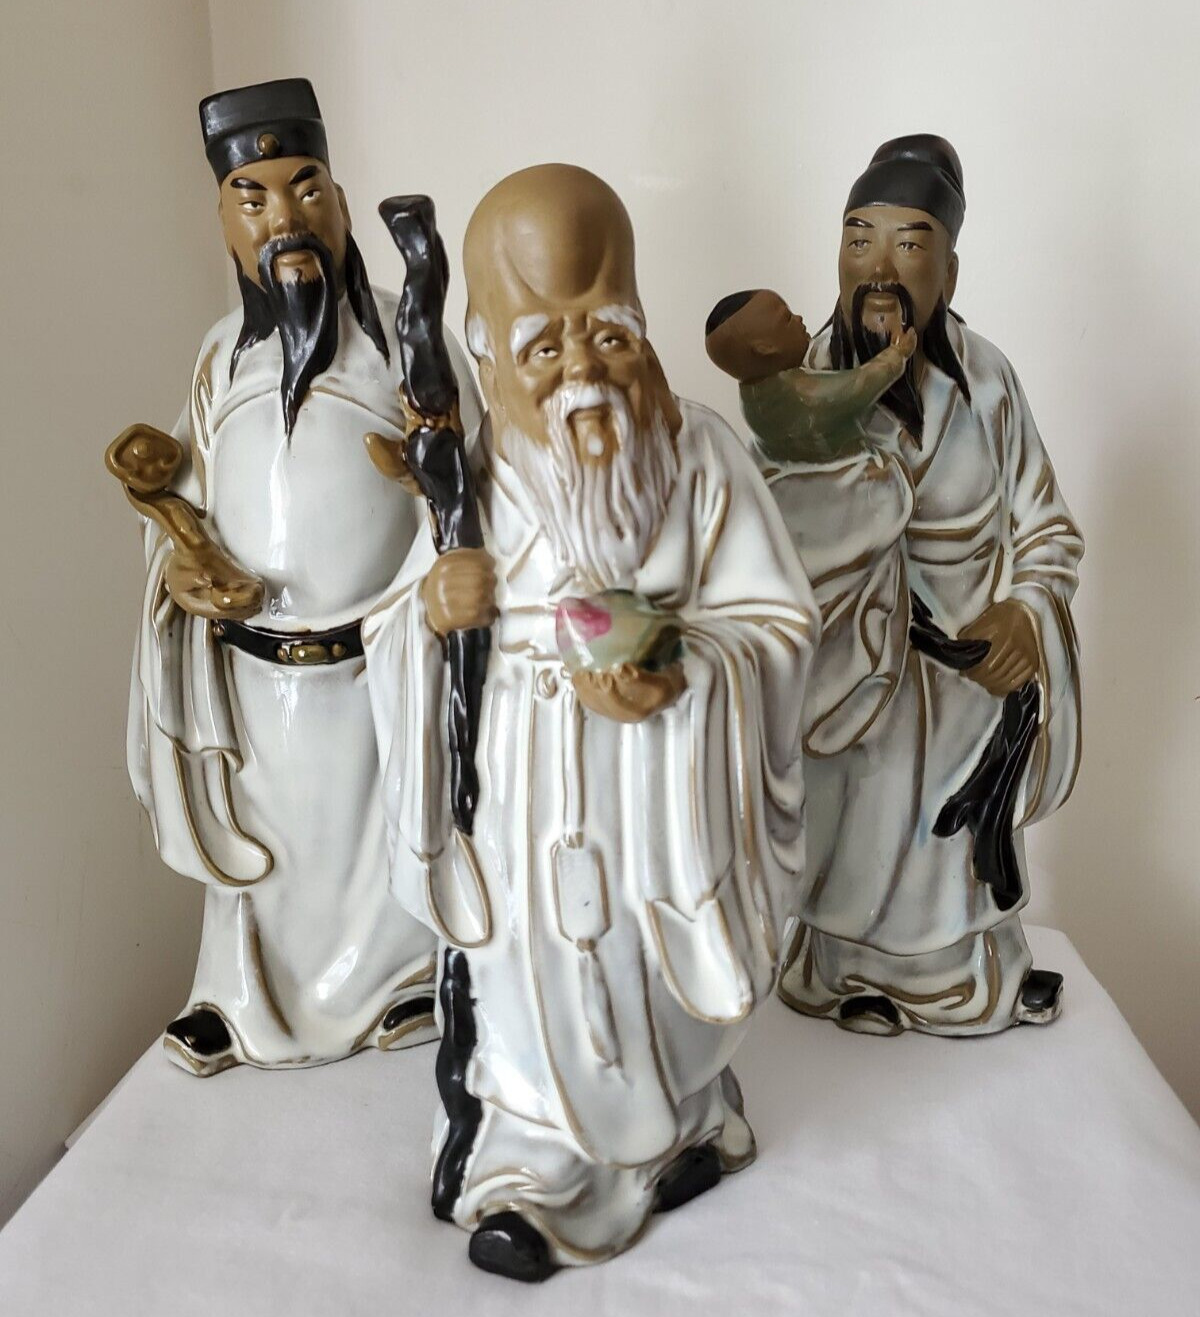 Vintage Mudmen Chinese Figurines (lot of 3) - 11